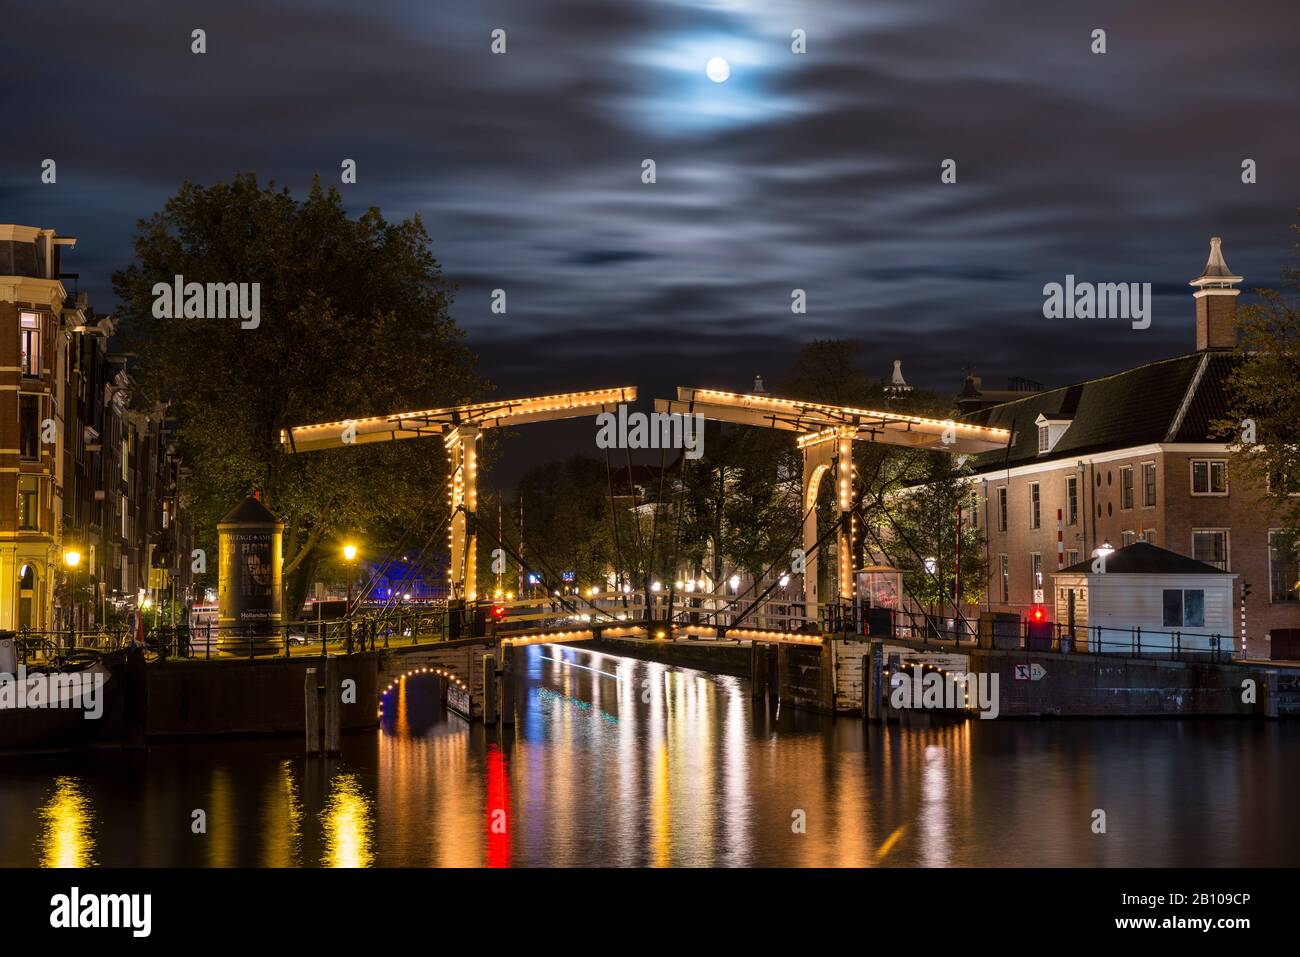 Skinny Brug at night, Amsterdam, Holland, Netherlands Stock Photo